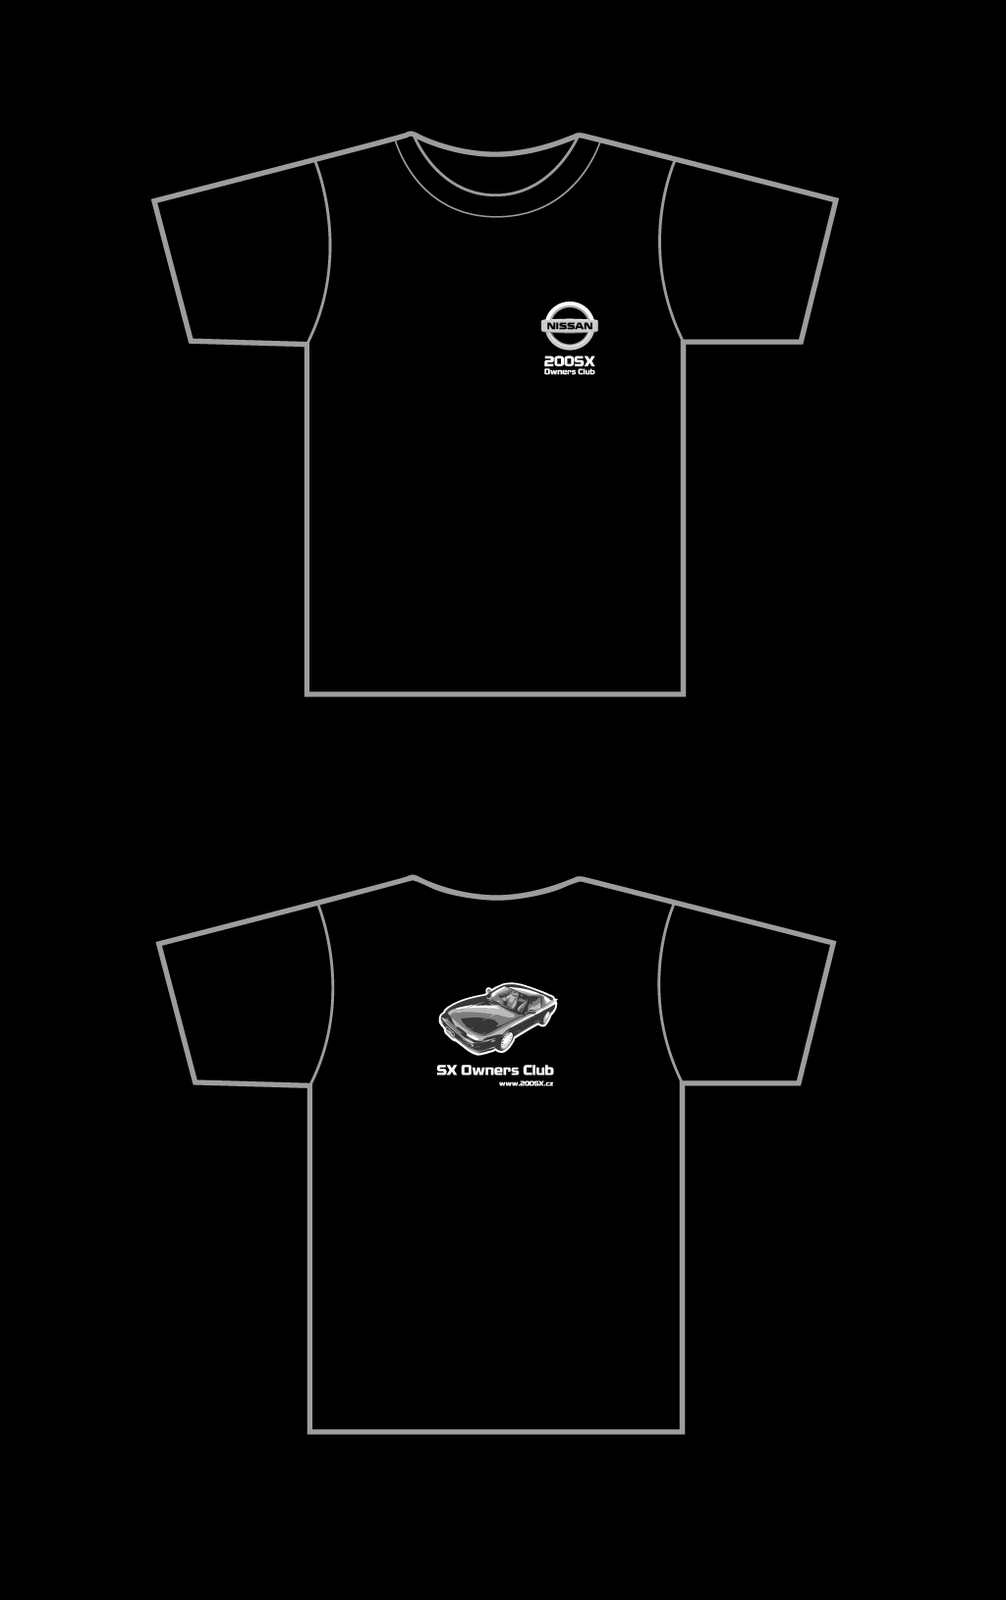 200sx-owners-tshirt-black.png